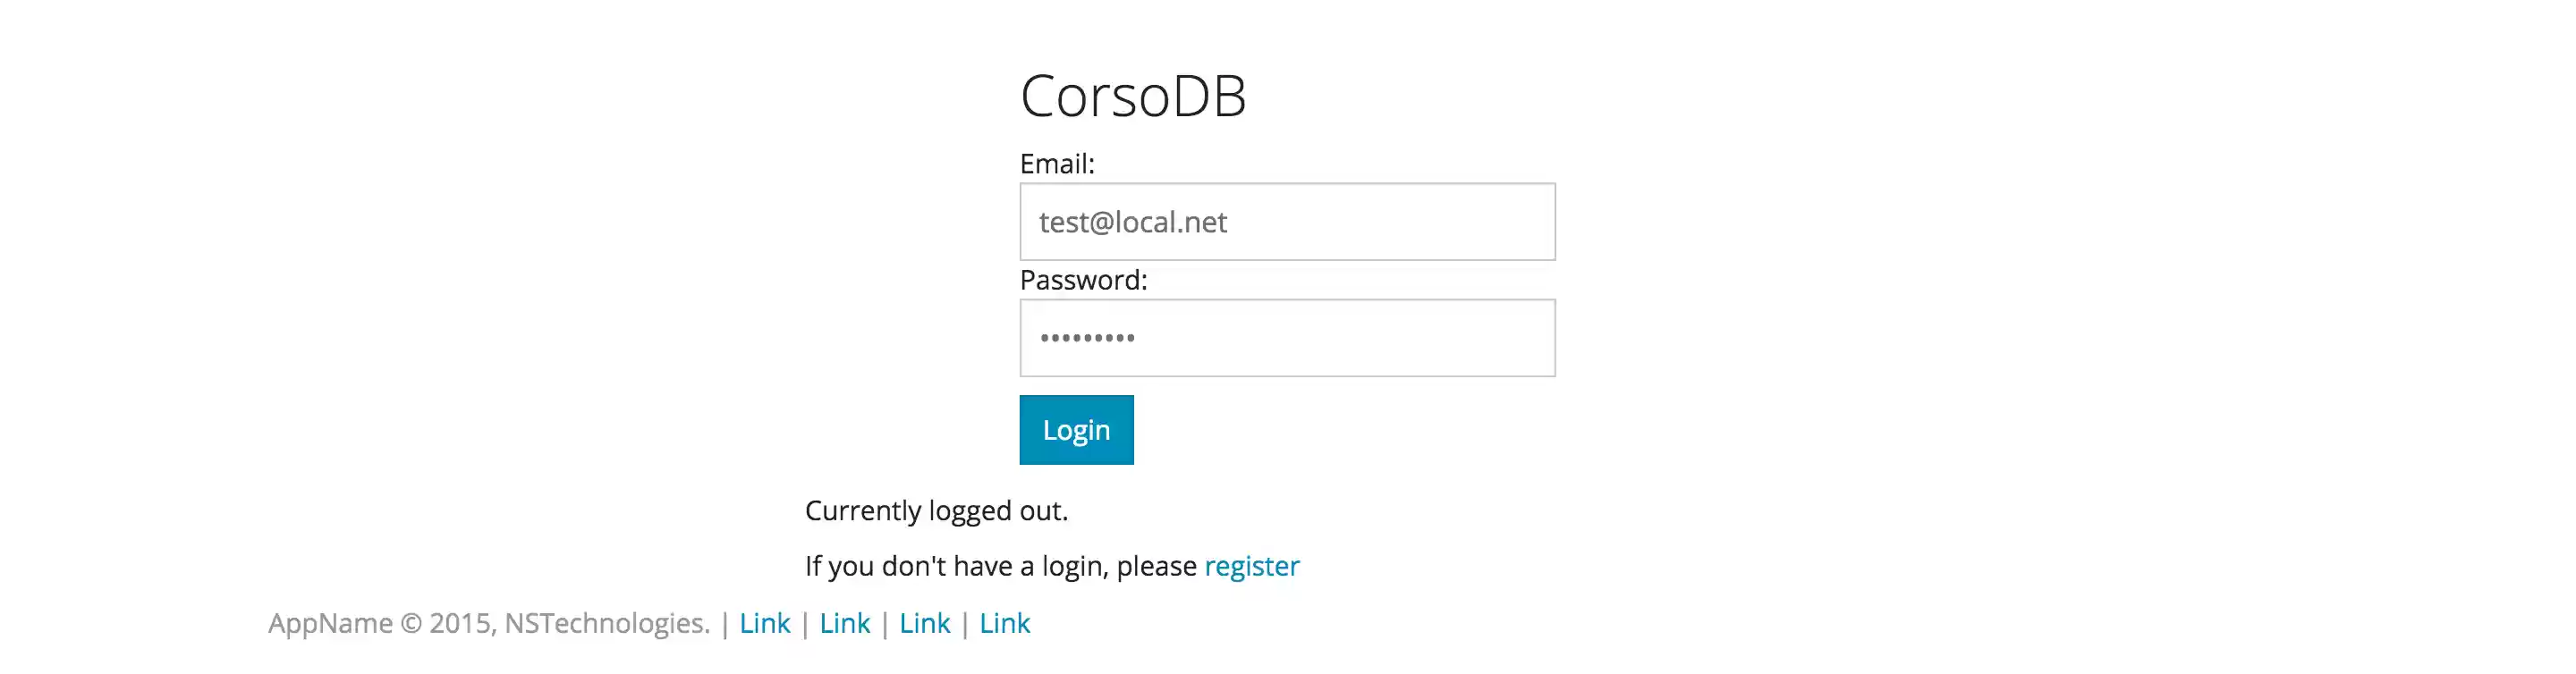 Download web tool or web app CorsoDB Web Application Framework